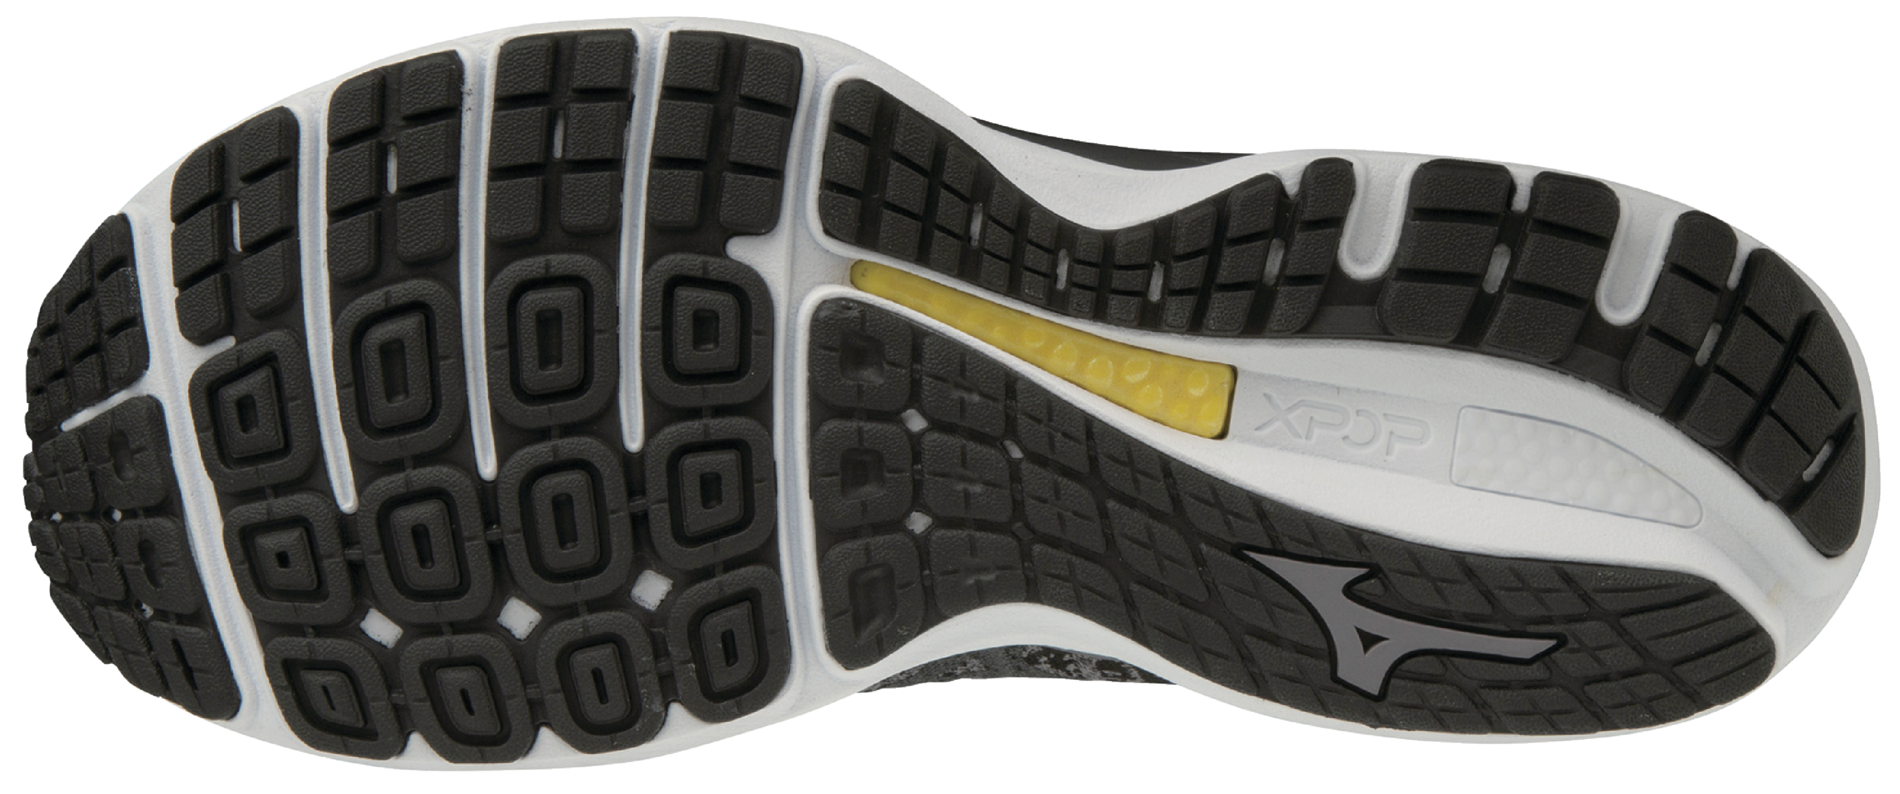 Mizuno Wave Sky Waveknit™ 3 2E (Wide) Men's Running Shoe, Size 12.5, Quiet Shade (9I9i) - image 3 of 7